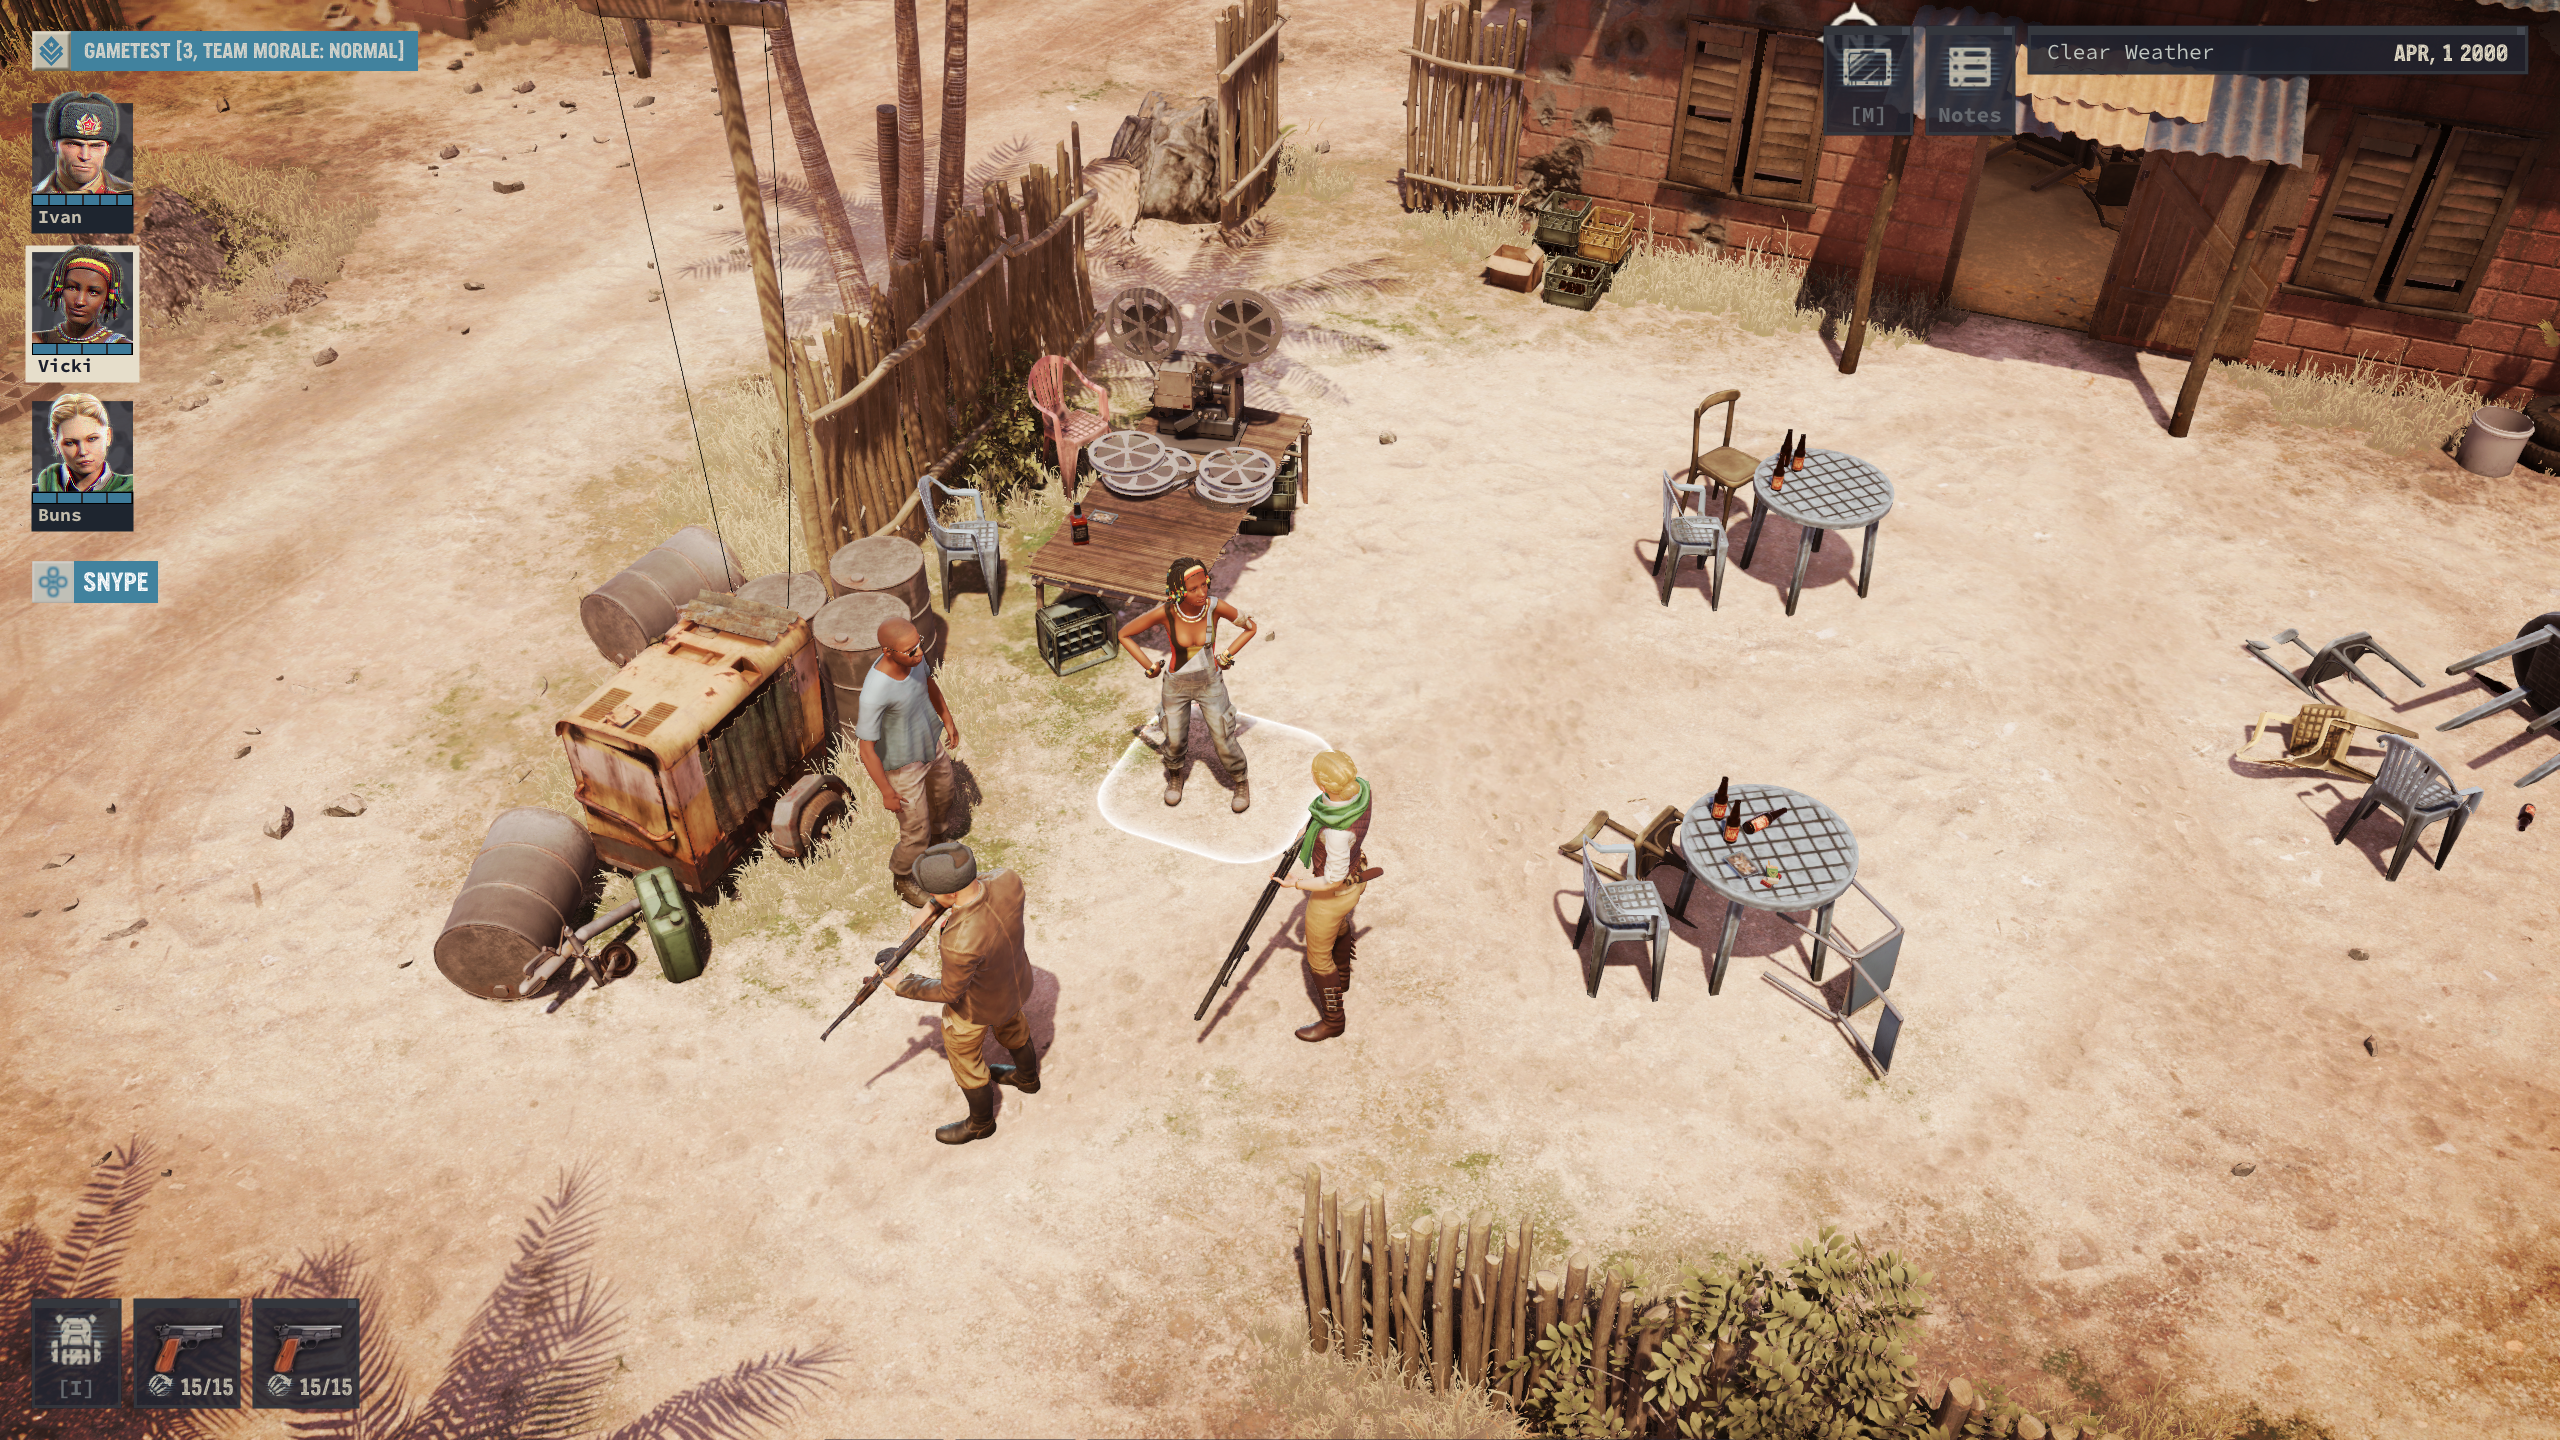 A screenshot of Jagged Alliance 3 showing three mercenaries standing in a dusty environment, next to an NPC.